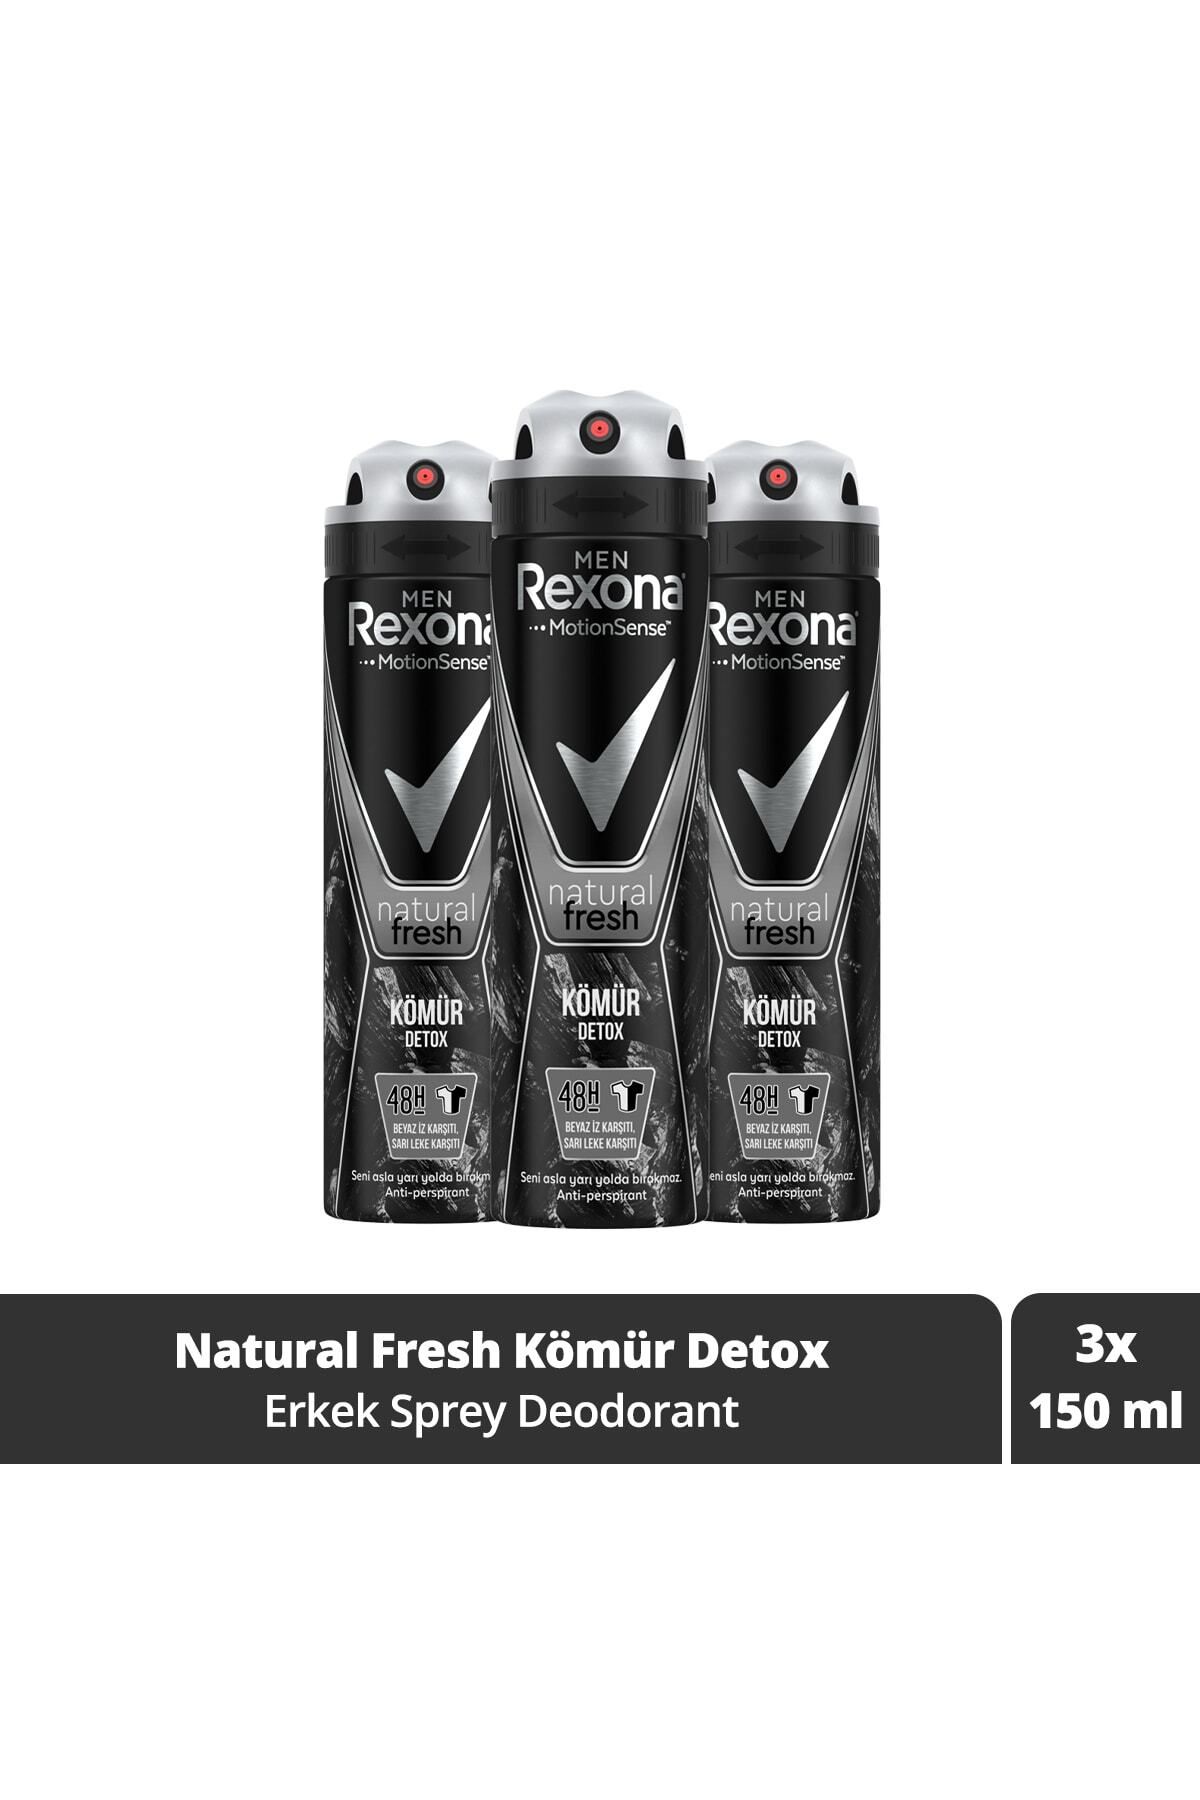 Rexona Men Erkek Sprey Deodorant Natural Fresh Kömür Detox 150 ml x3 Adet